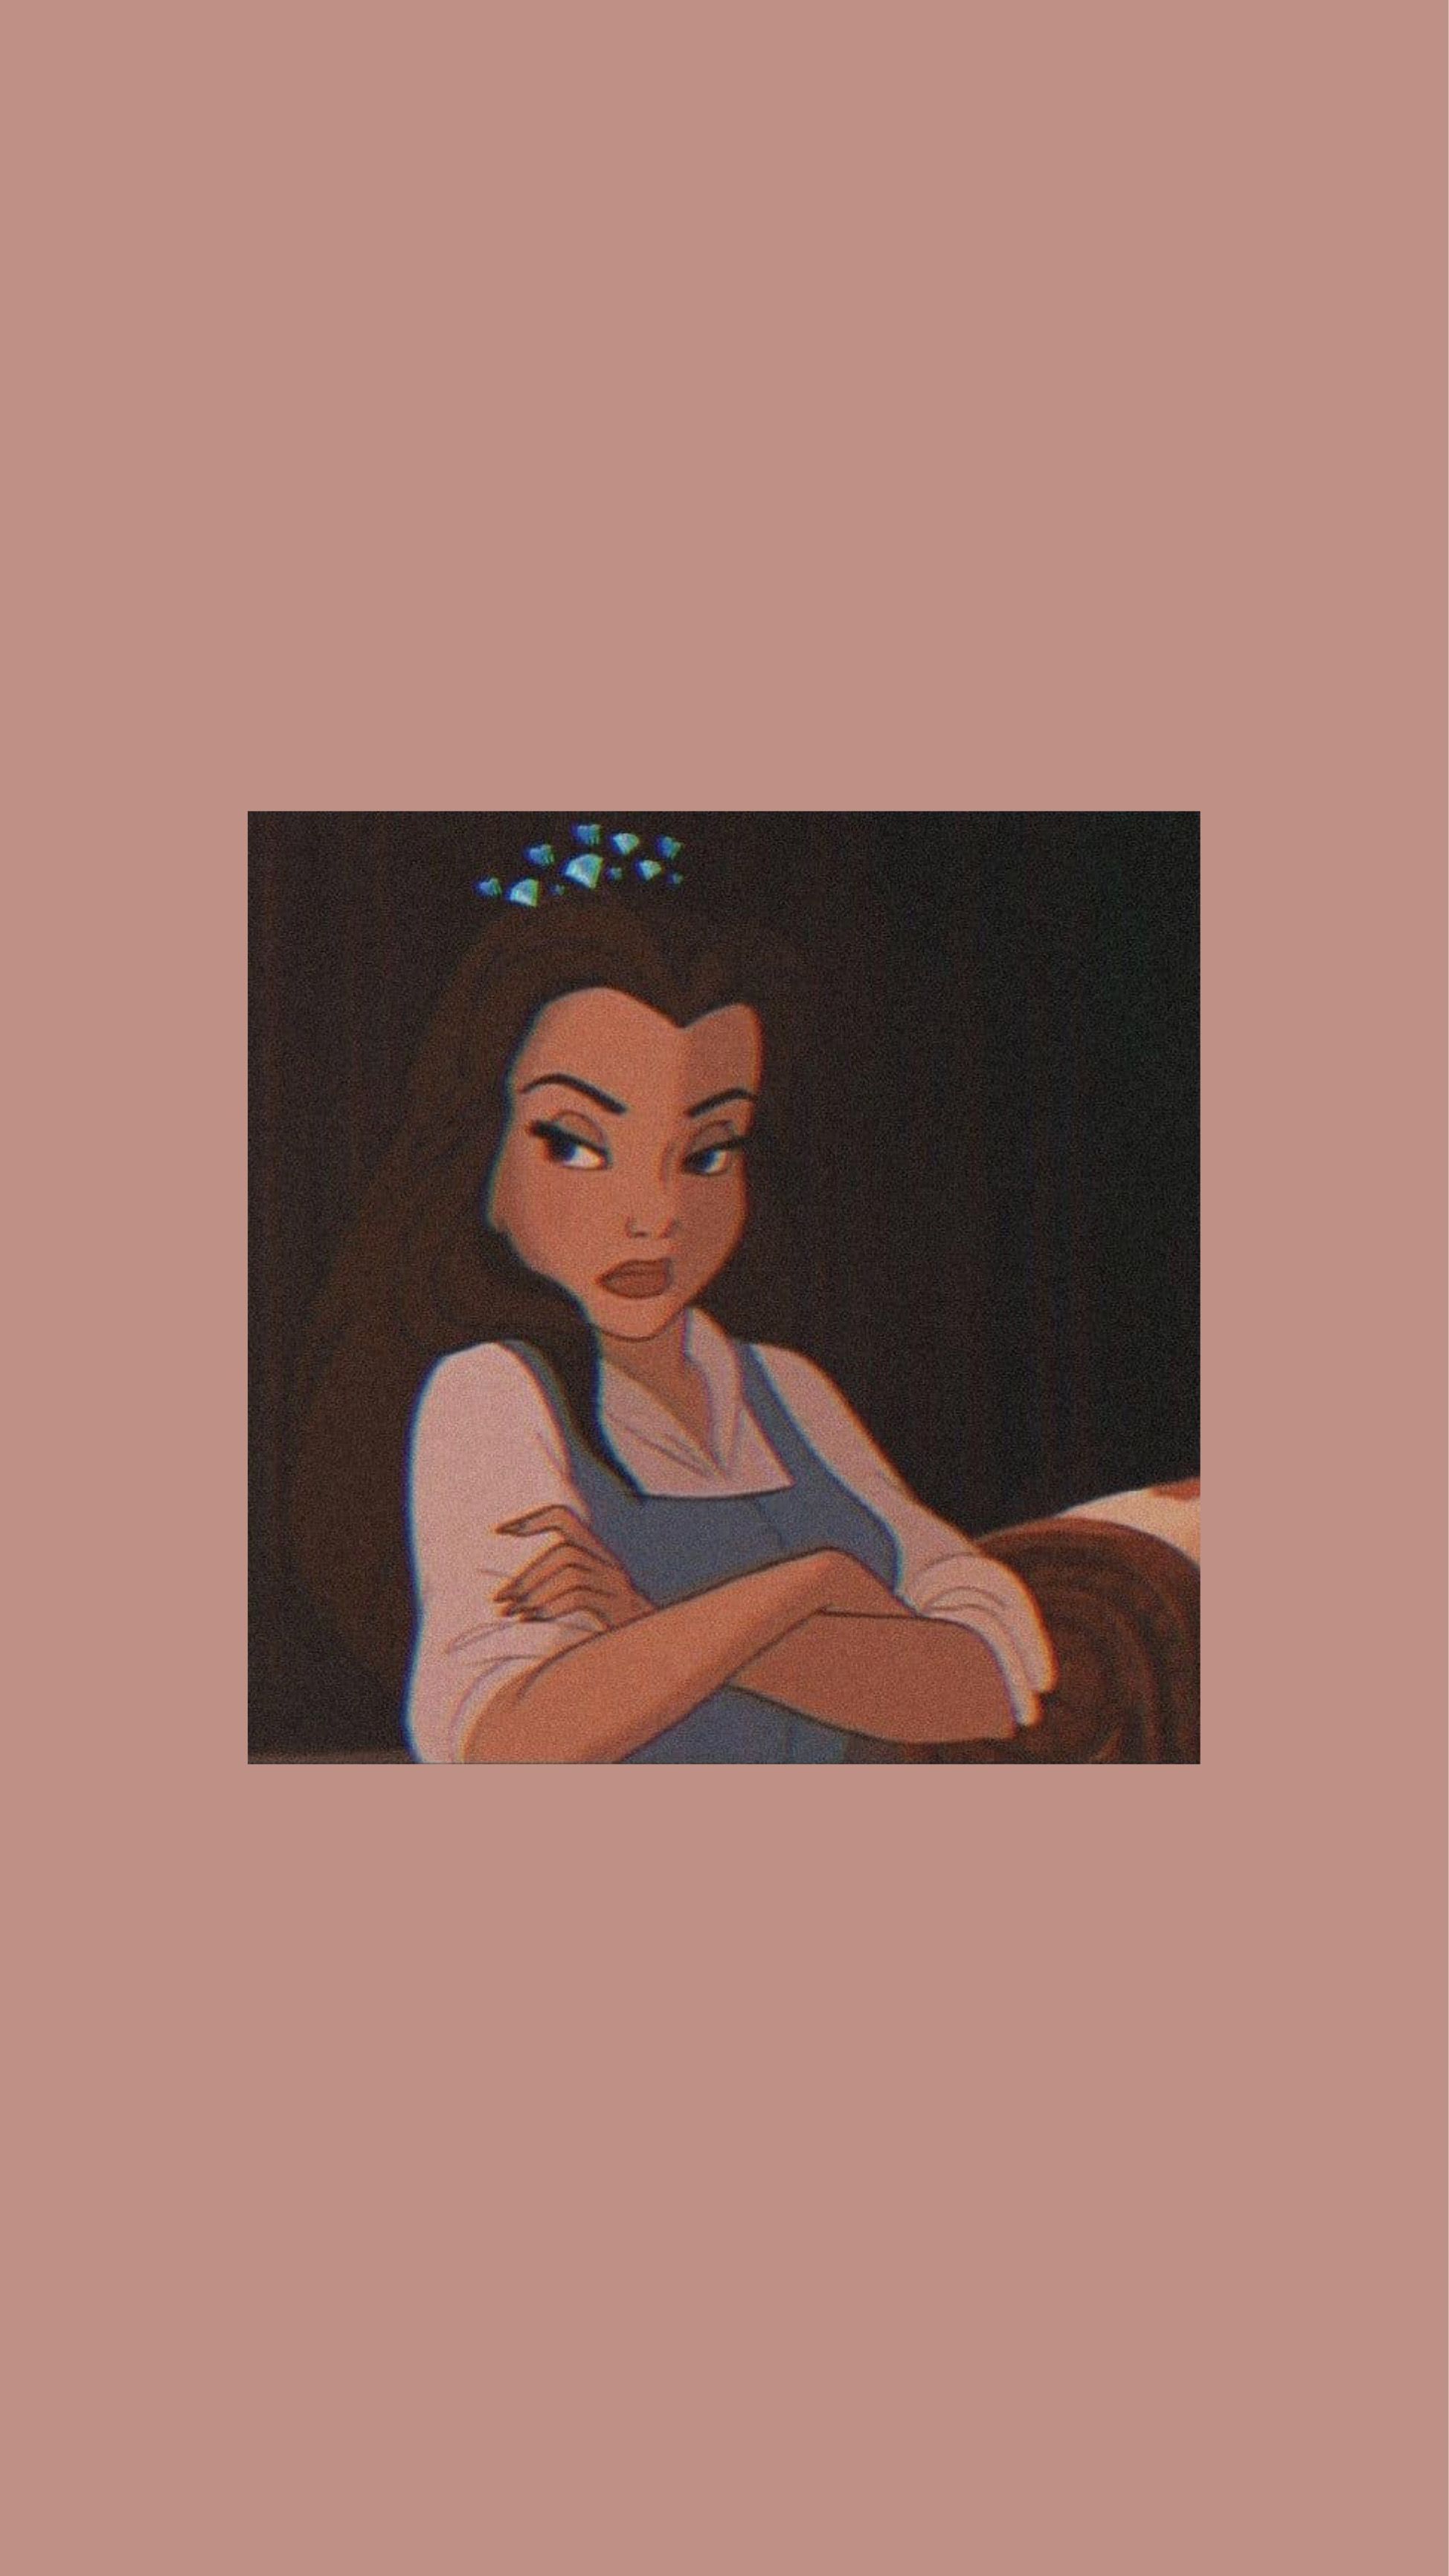 Cute Aesthetic Disney Princess Wallpapers  Top Free Cute Aesthetic Disney  Princess Backgrounds  WallpaperAccess